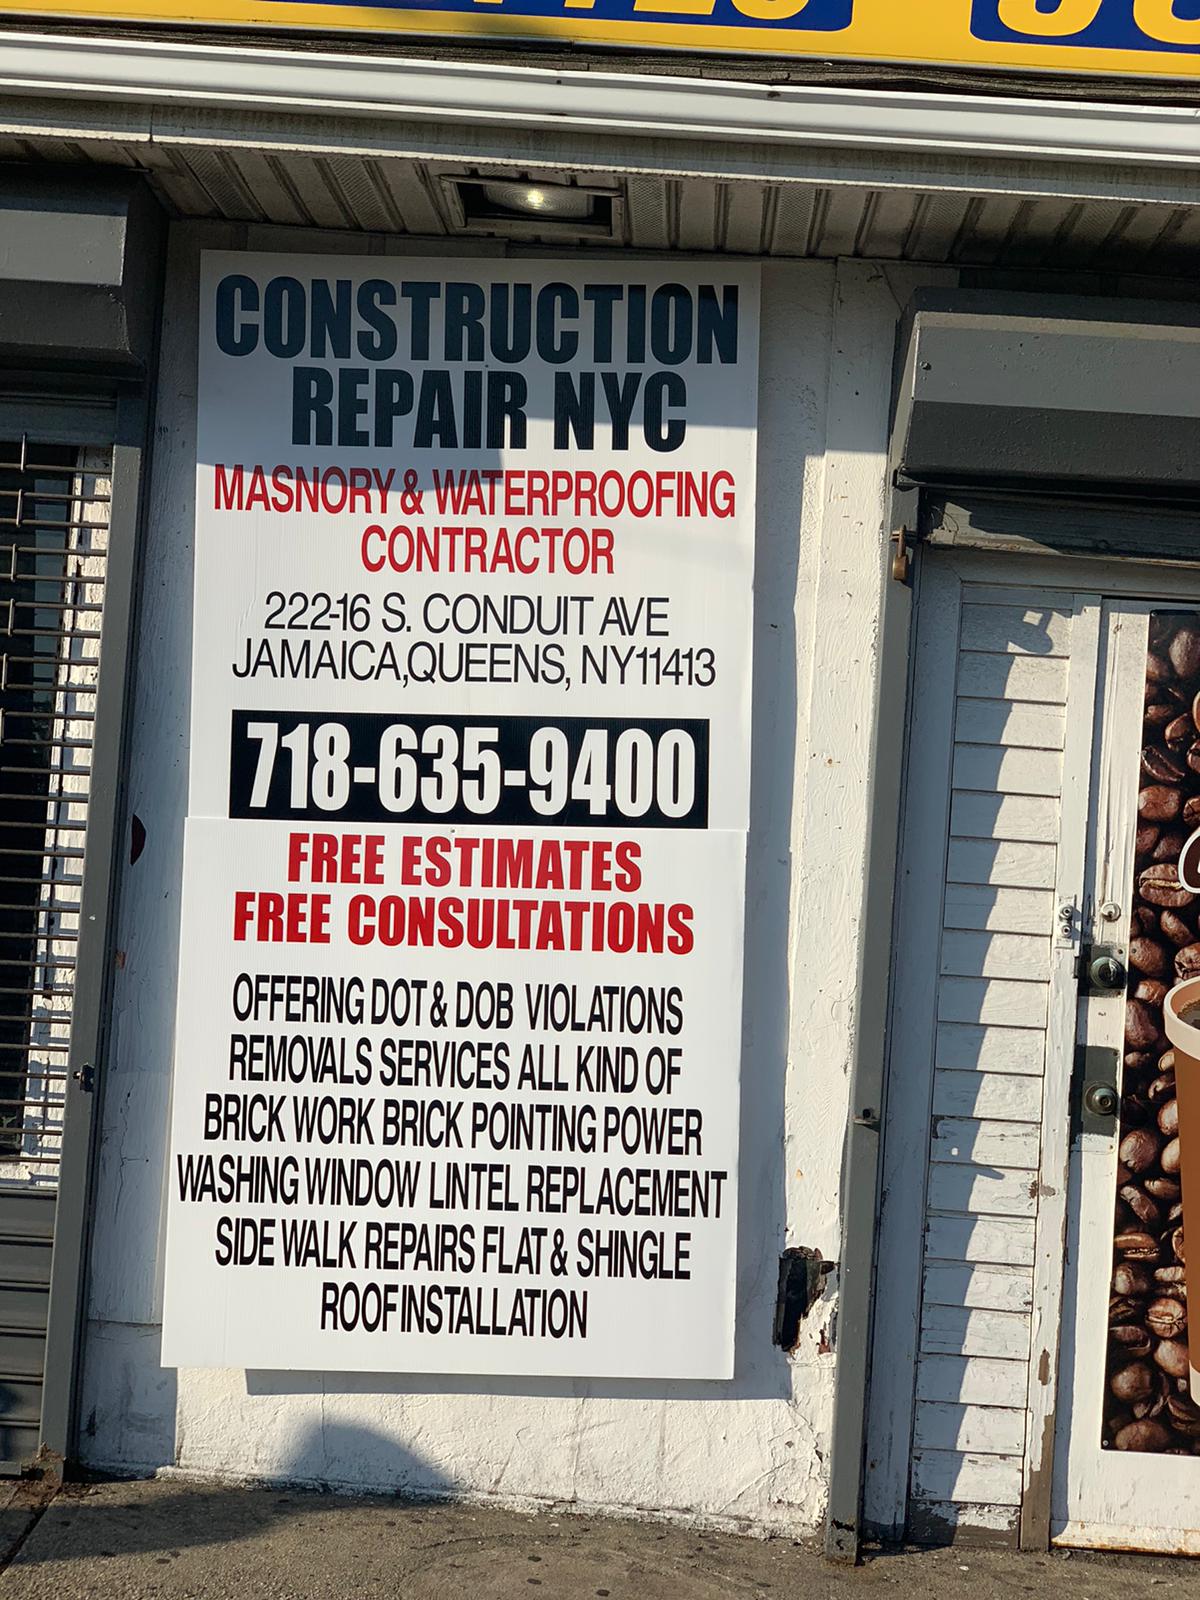 Construction Repair NYC - Masonry & Waterproofing